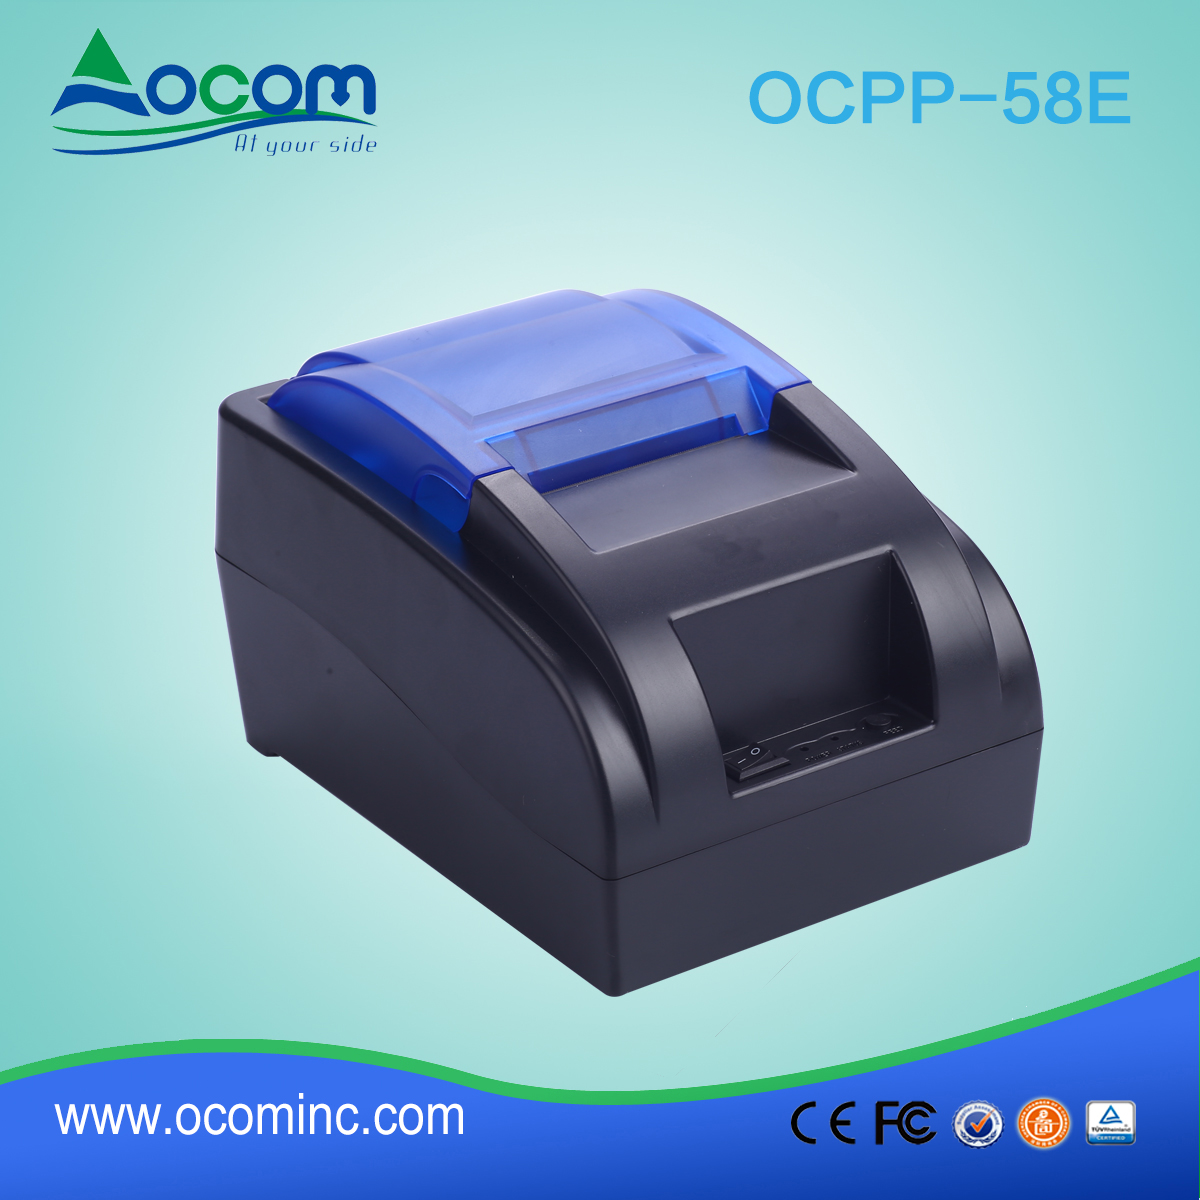 OCPP-58E-China maakte goedkope 58 mm POS-printer met Bluetooth- of WIFI-optie